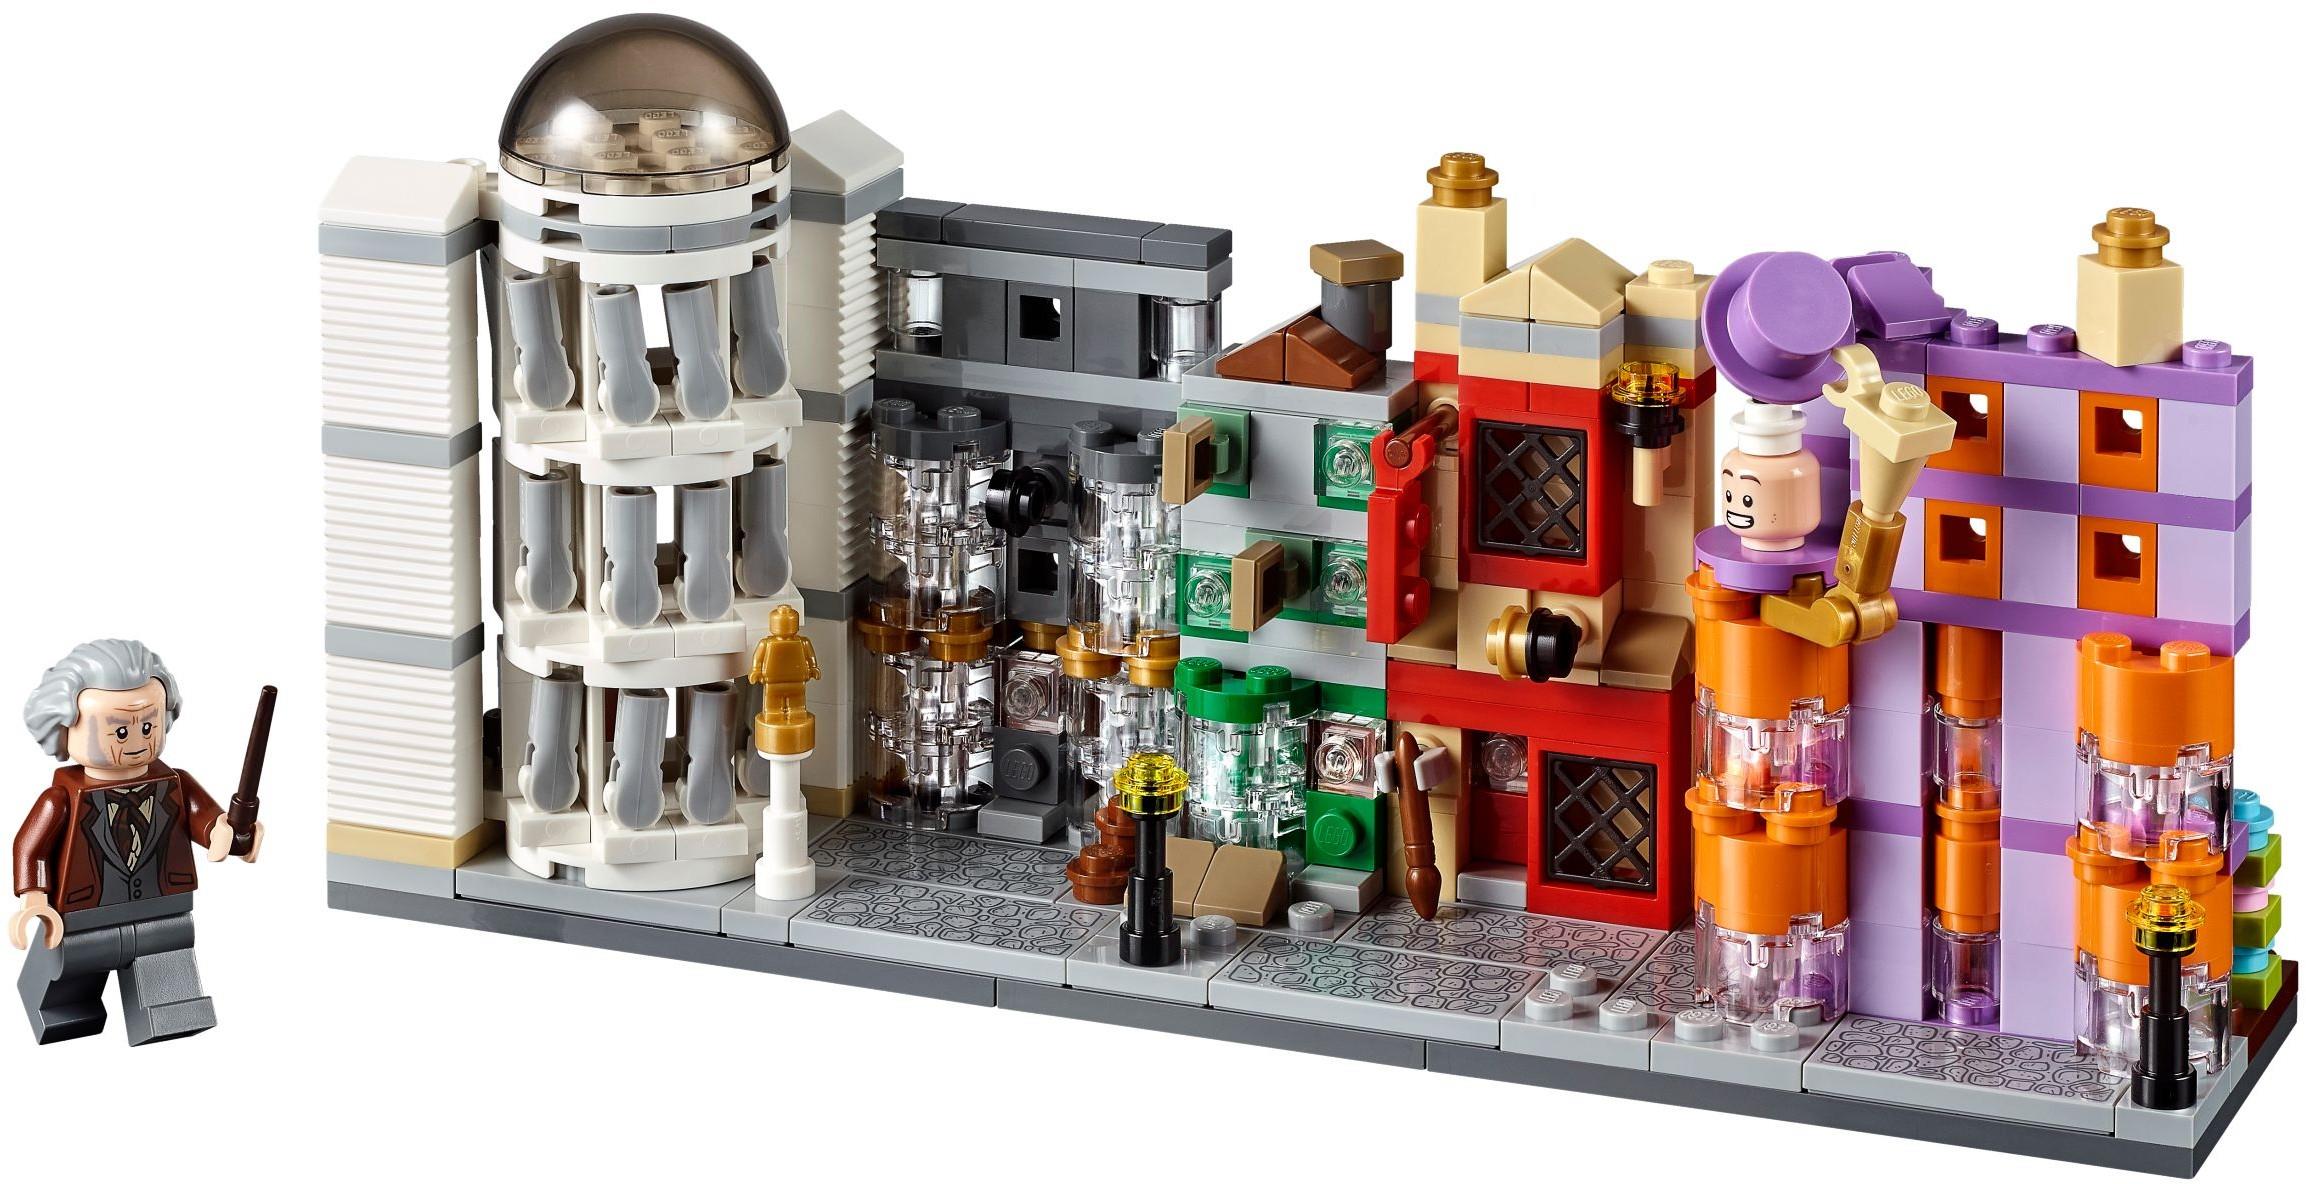 Lego 40289 Harry Potter Diagon Alley Mini Building 374 Pieces for sale online